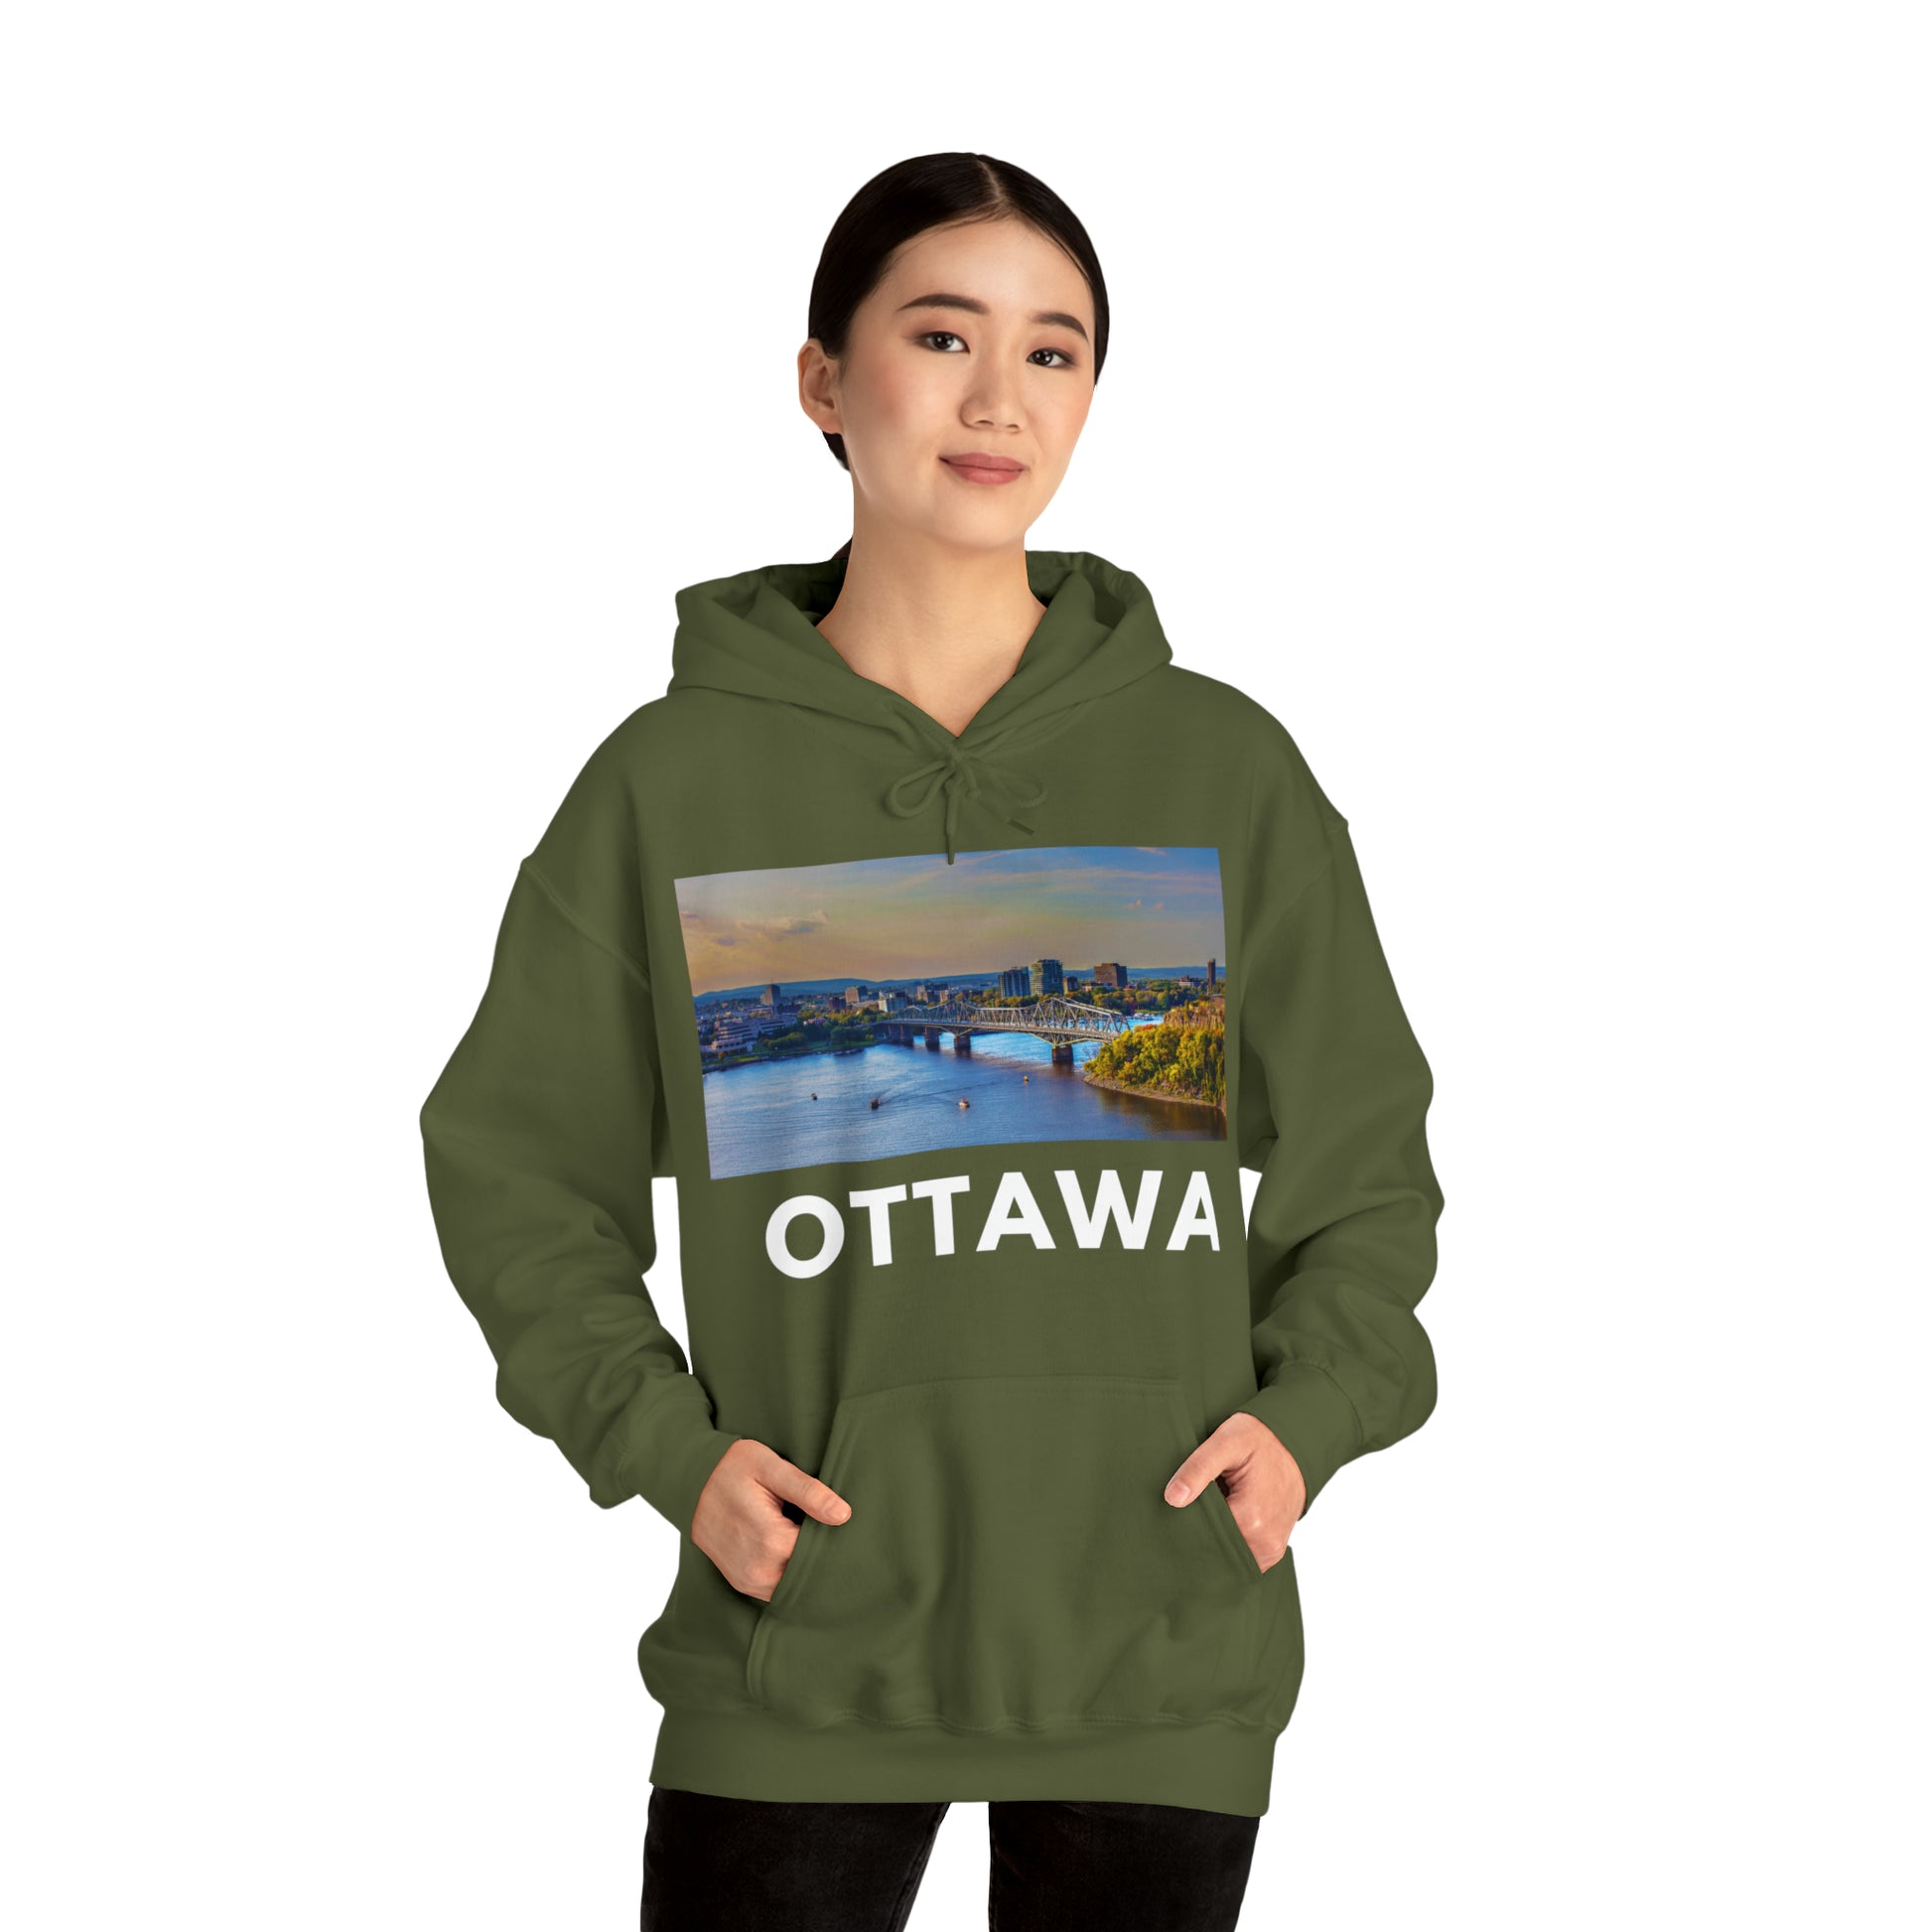   Ottawa Hoodie: River Run from HoodySZN.com